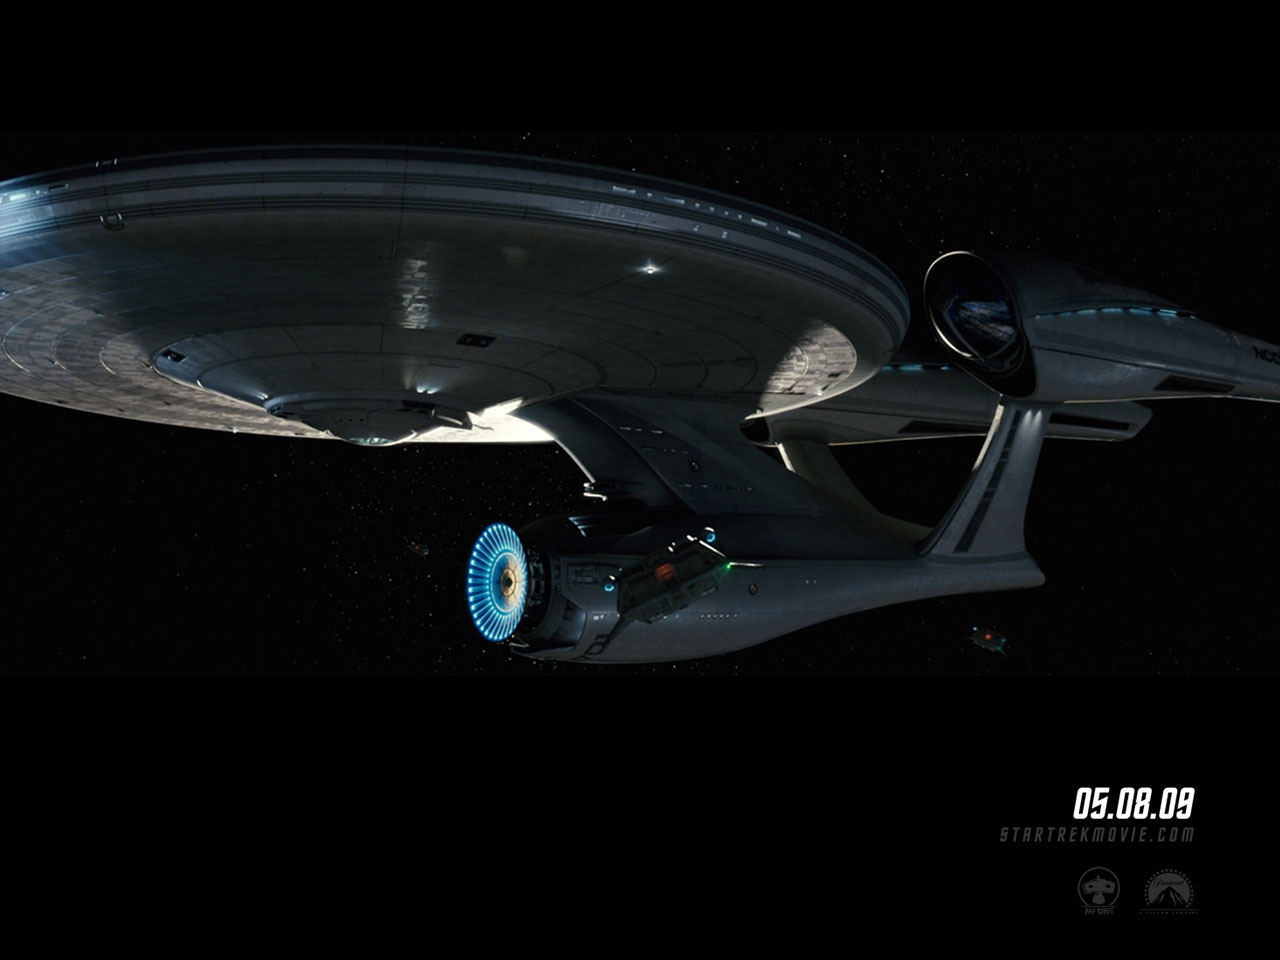 "Star Trek" desktop wallpaper number 10 - the 2009 movie version of the USS Enterprise NCC-1701 (1280 x 960 pixels)